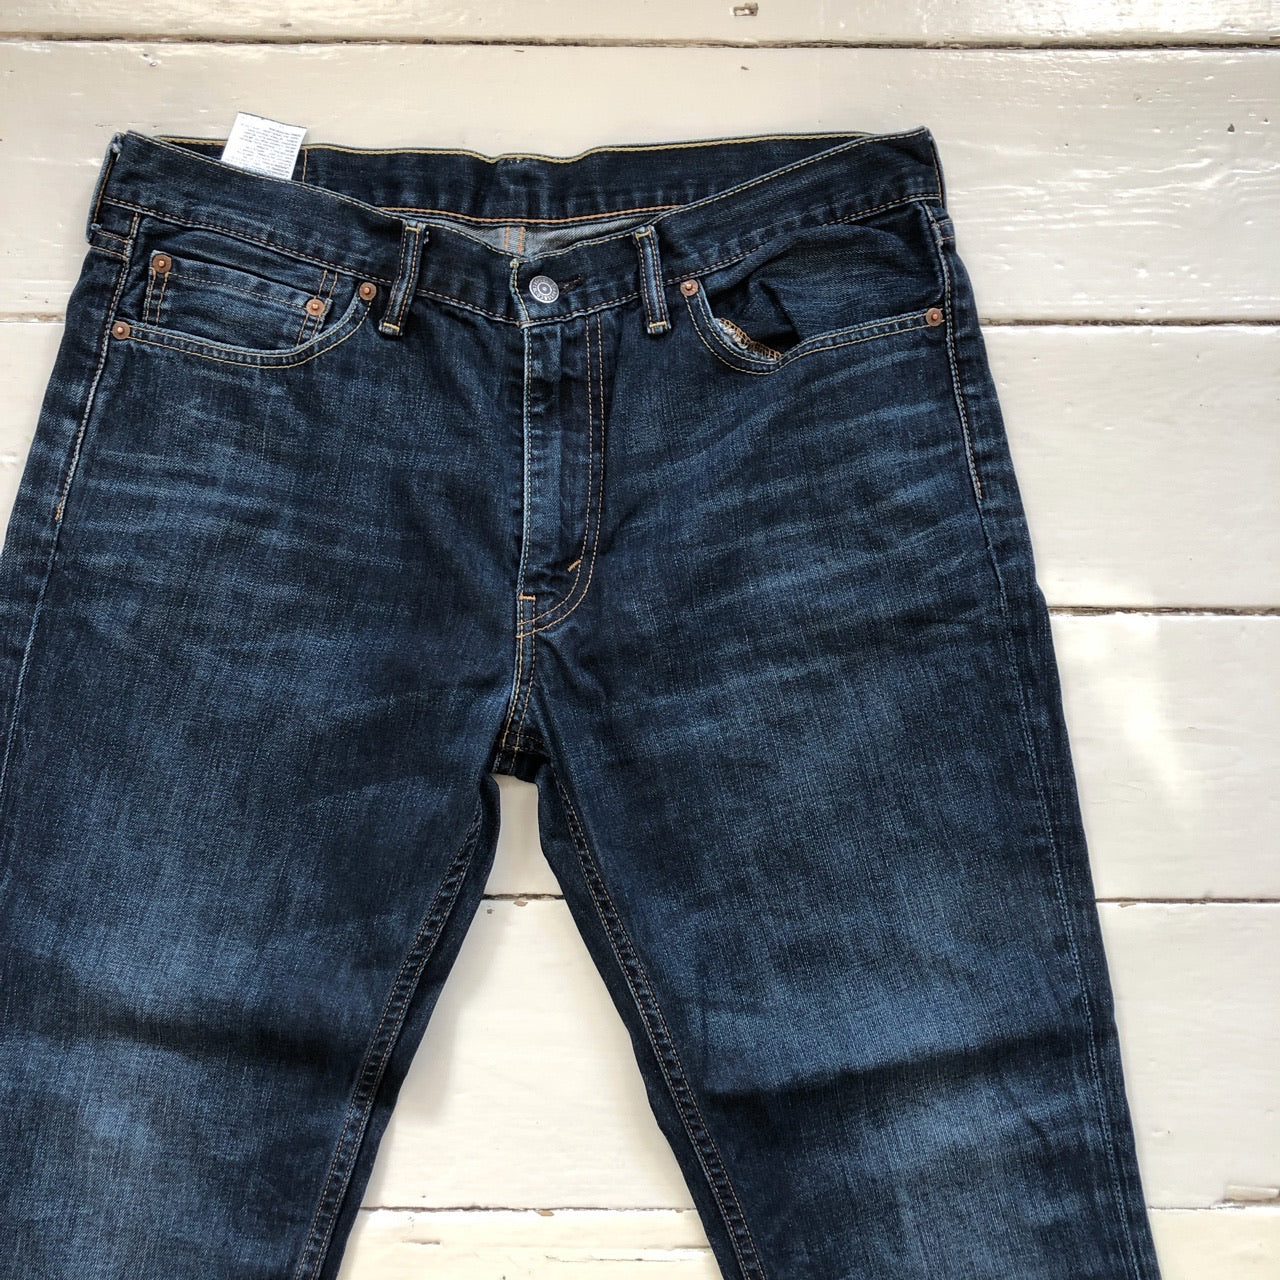 Levis 511 Slim Navy Jeans (36/29)